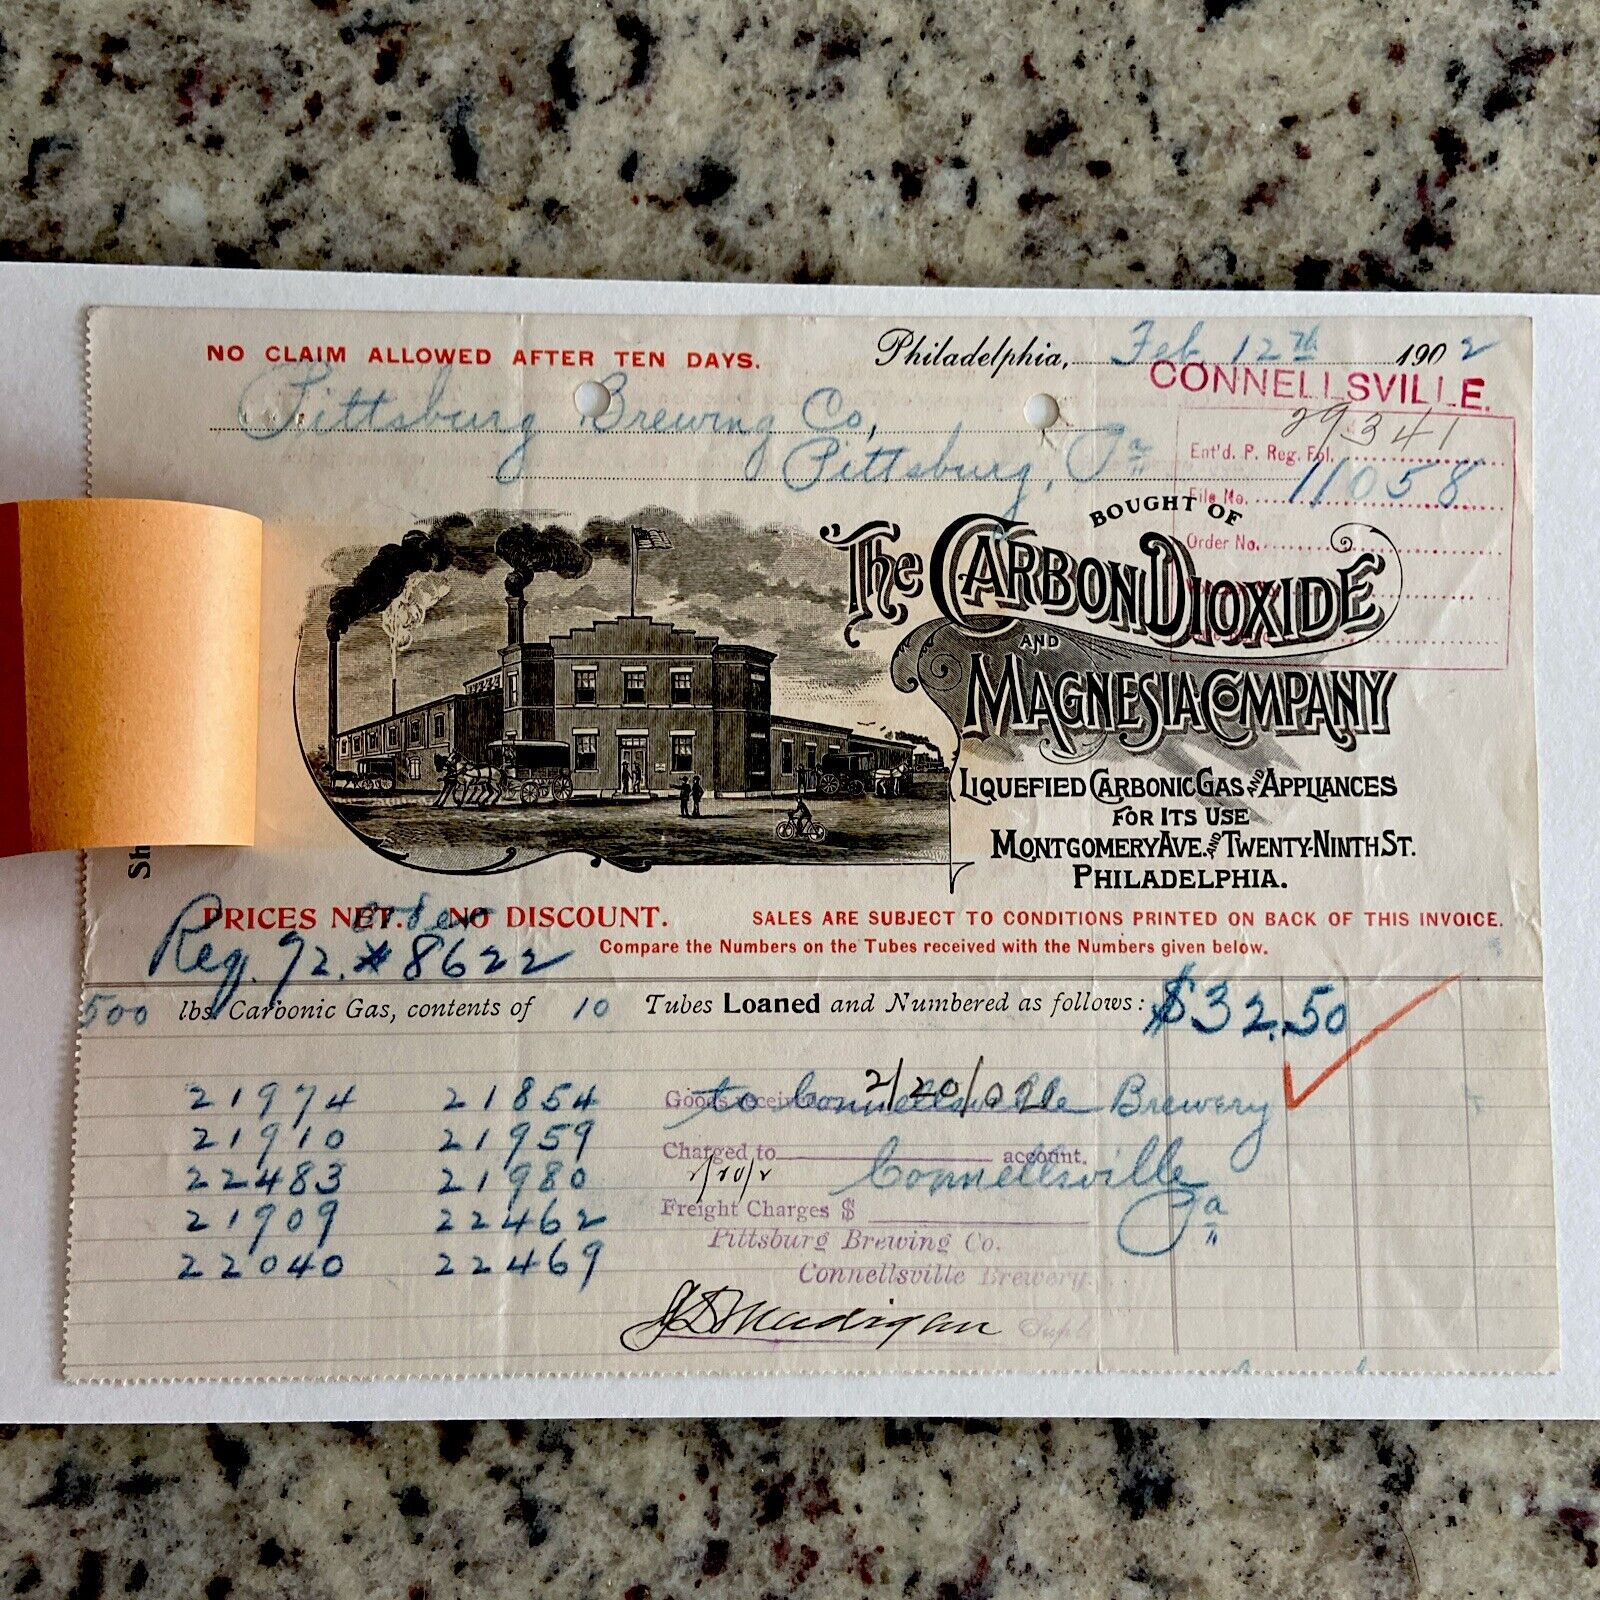 Rare 1902 Carbon Dioxide Magnesia Co Letterhead Invoice CONNELLSVILLE BREWERY PA